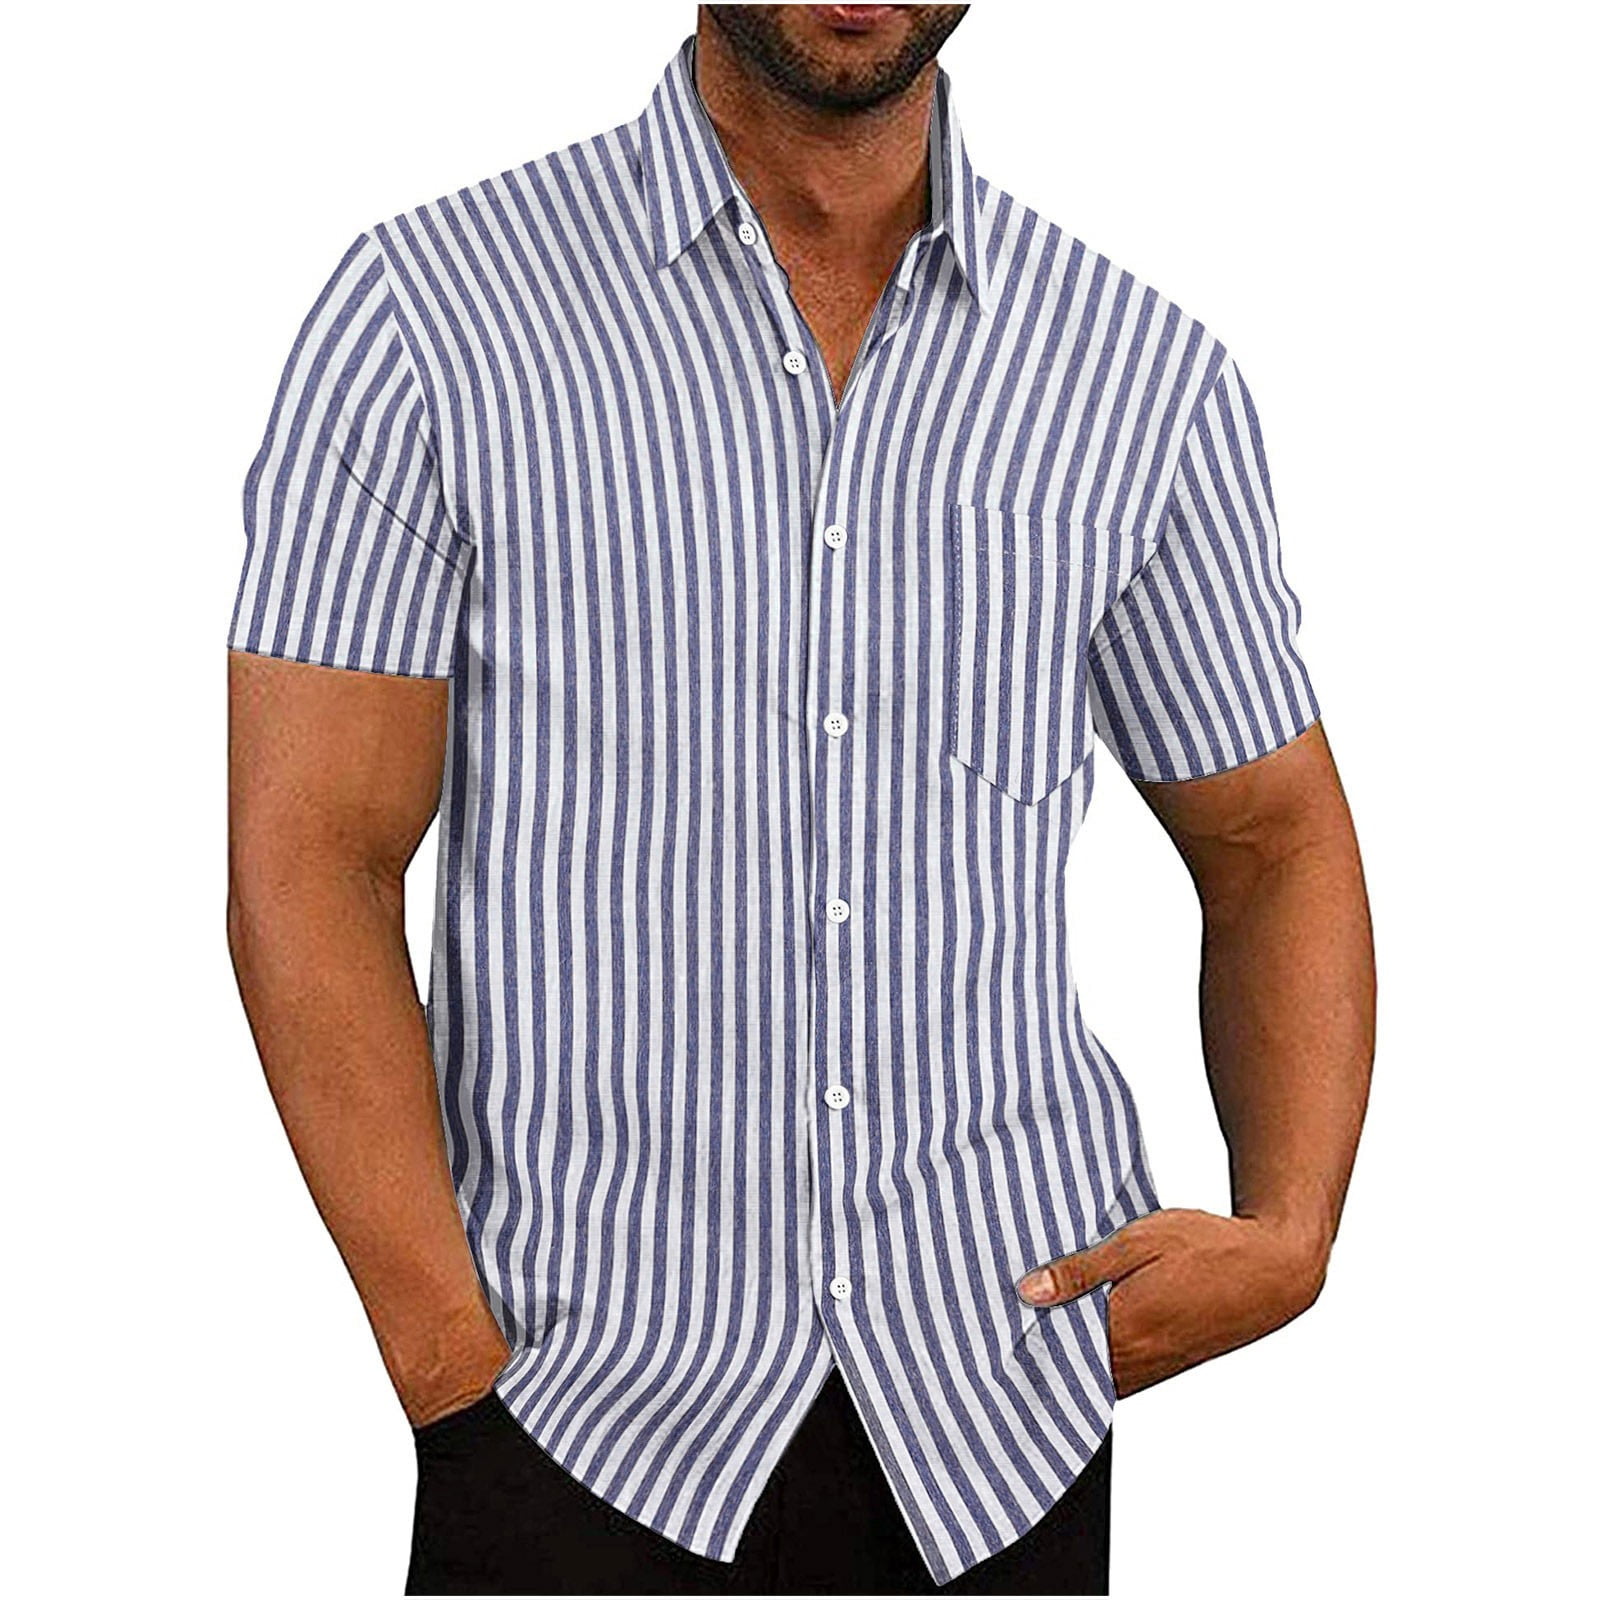 Tagold Button Down Polo Shirt for Men Fashion Short Sleeve Dress Shirts ...